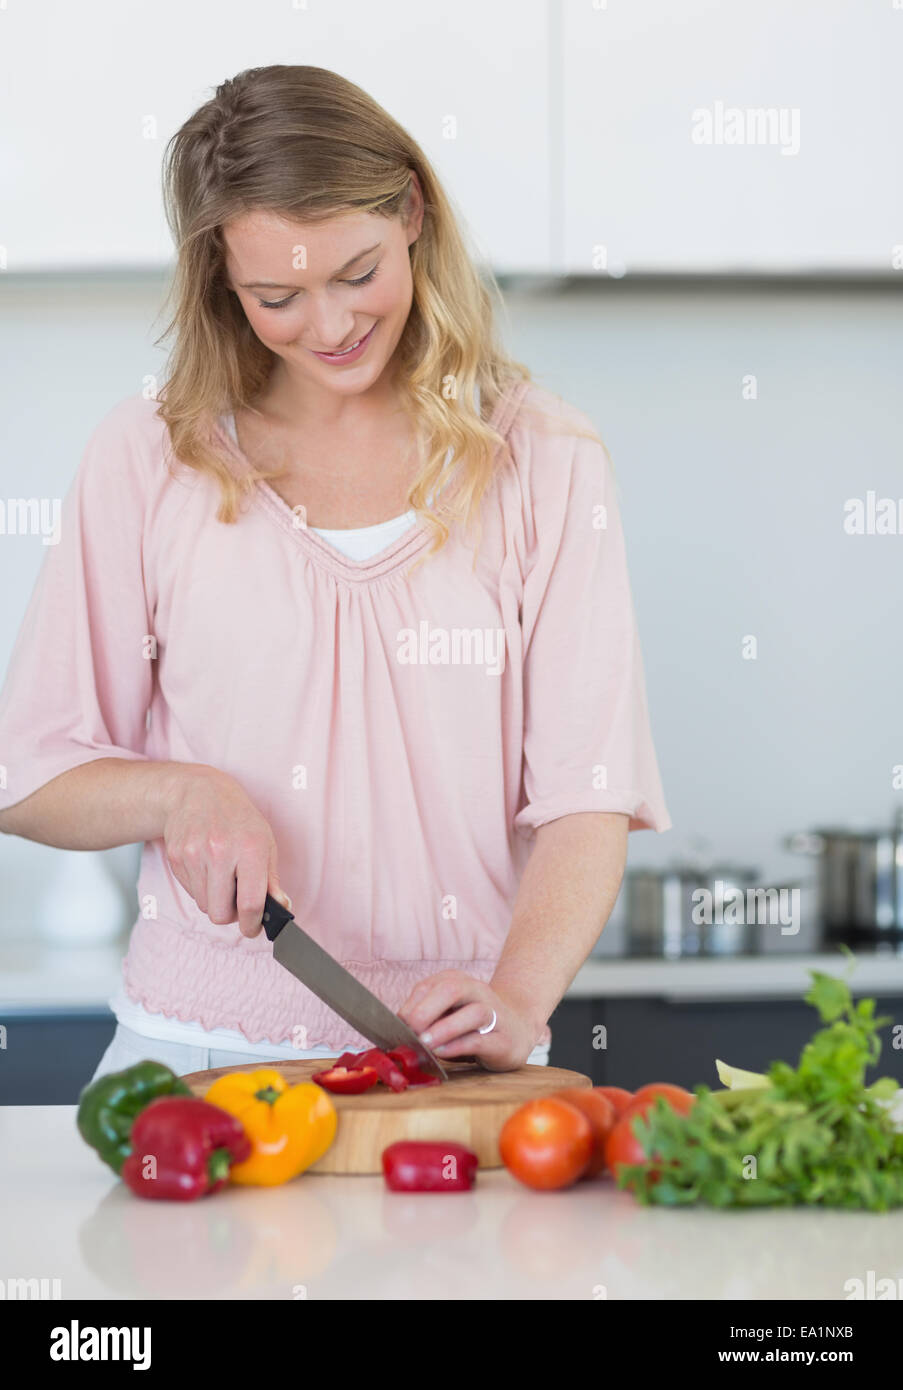 https://c8.alamy.com/comp/EA1NXB/woman-chopping-vegetables-at-kitchen-counter-EA1NXB.jpg